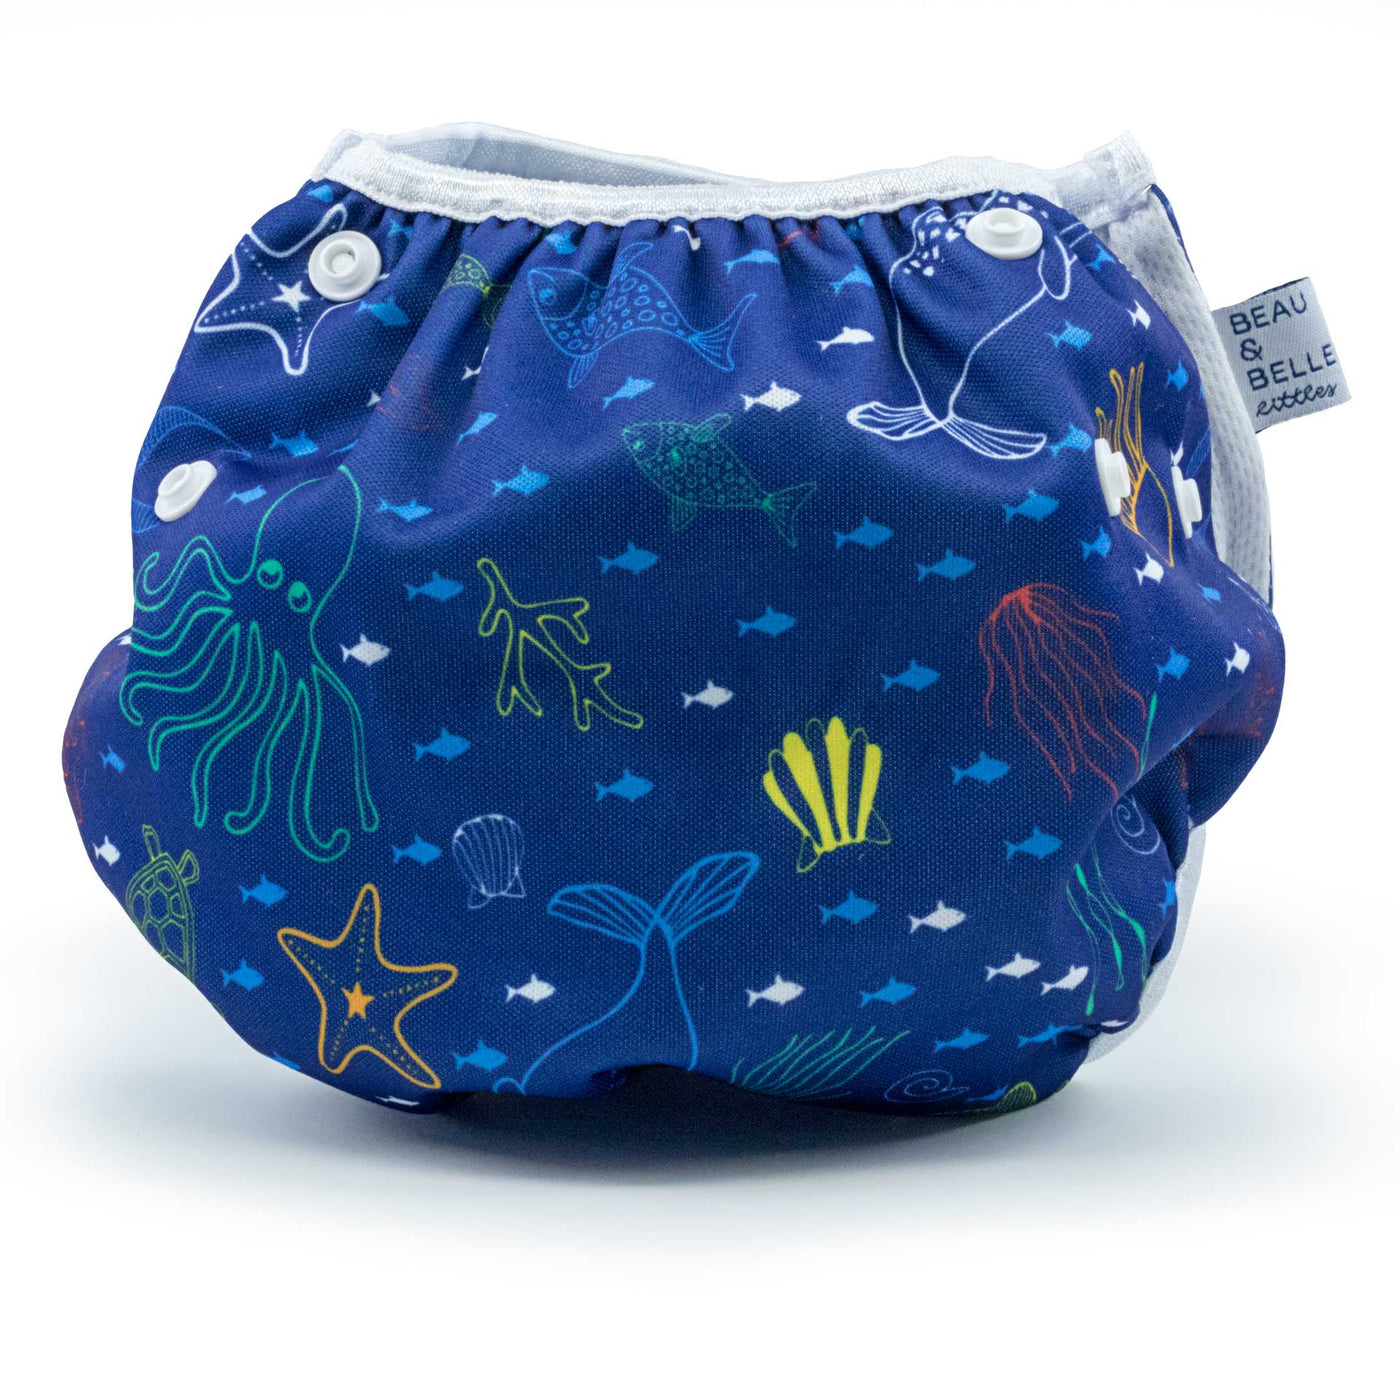 Sea Friends Nageuret Premium Reusable Swim Diaper, Adjustable 0-3 Years